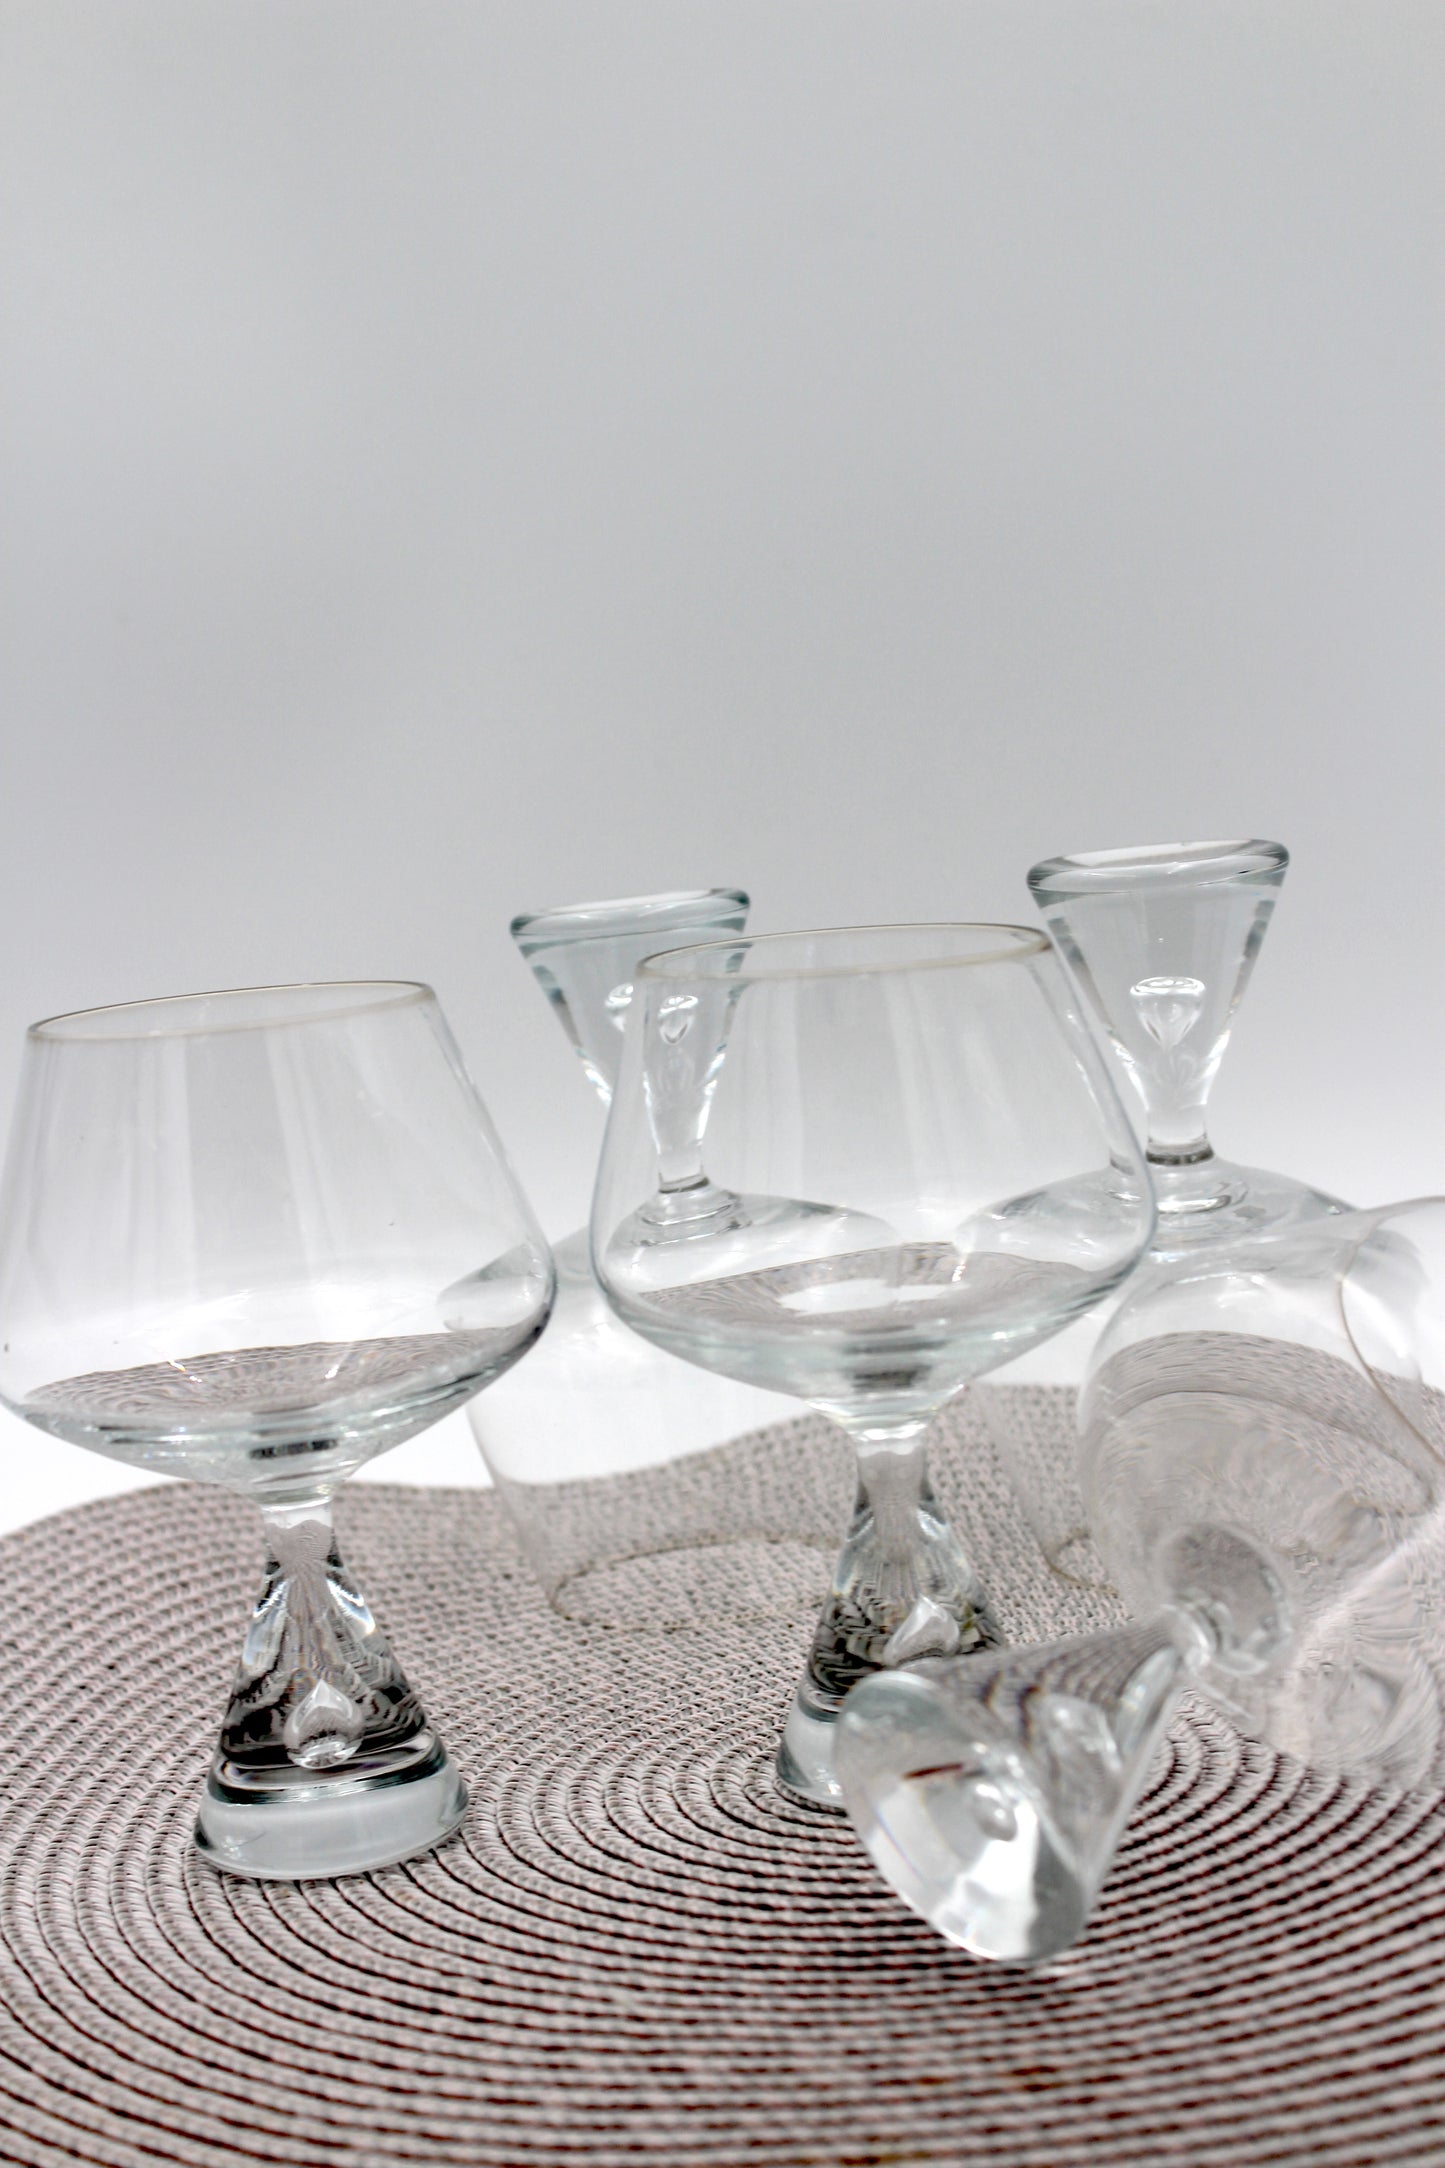 Holmegaard Princess - Cognac glass